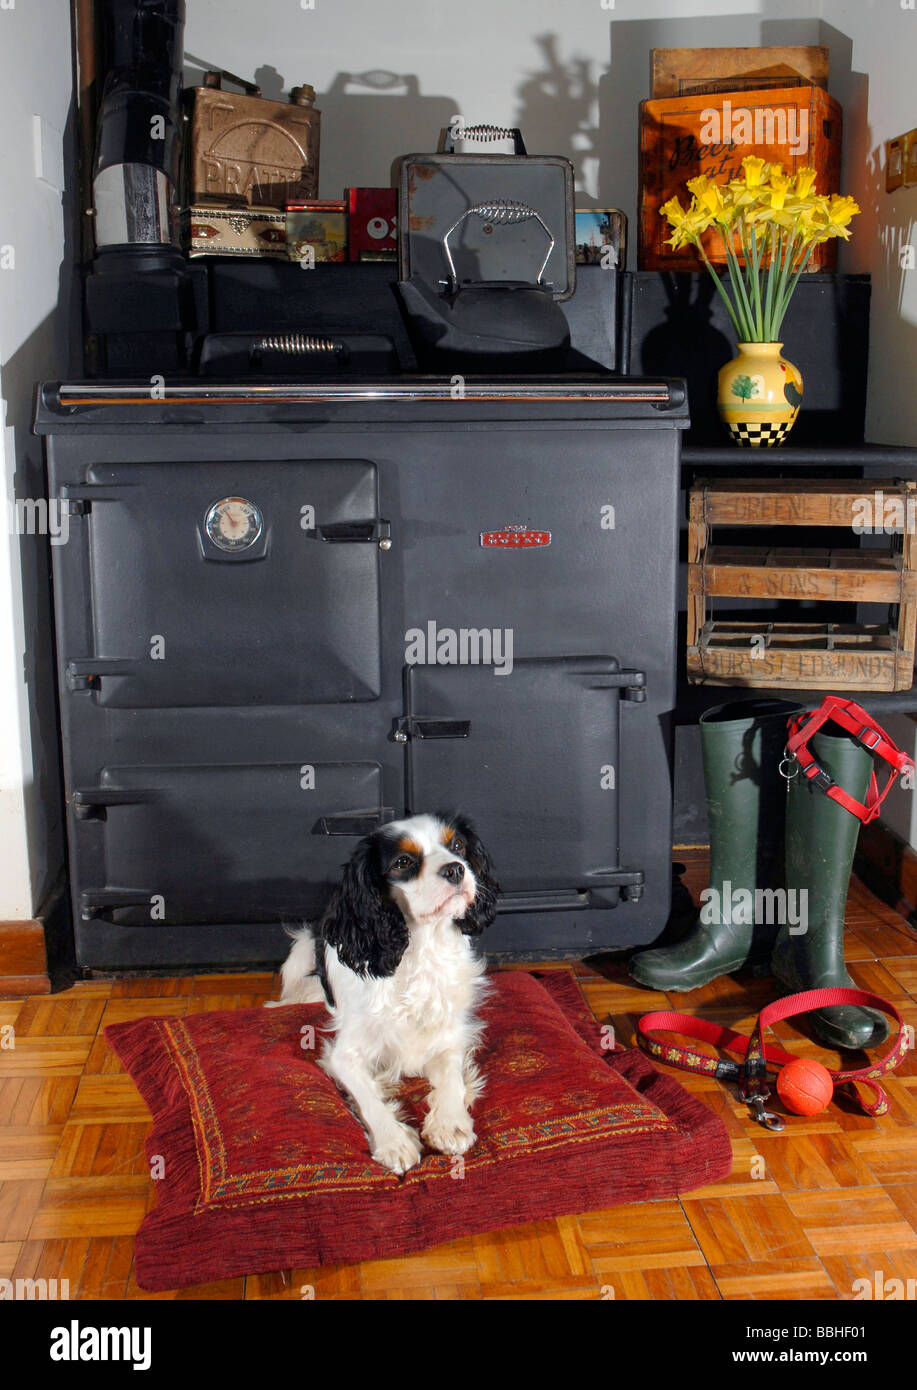 Range cooker and dog Stock Photo